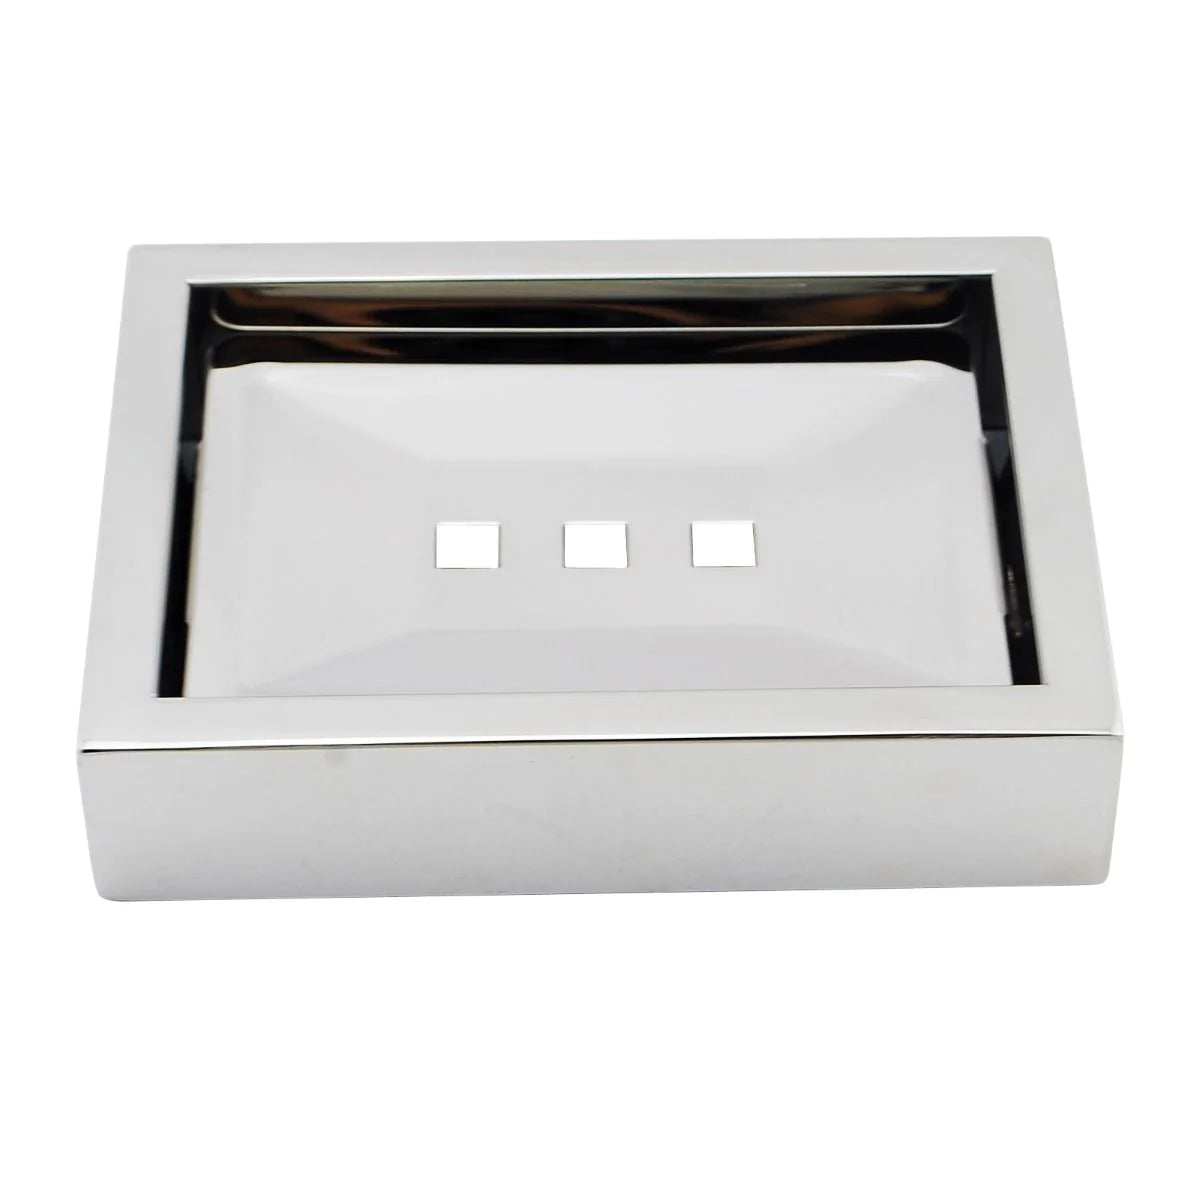 Ivano Soap Dish Holder: Elegant Accessory for Organized Bathroom Essentials-Chrome-CH6406-TR